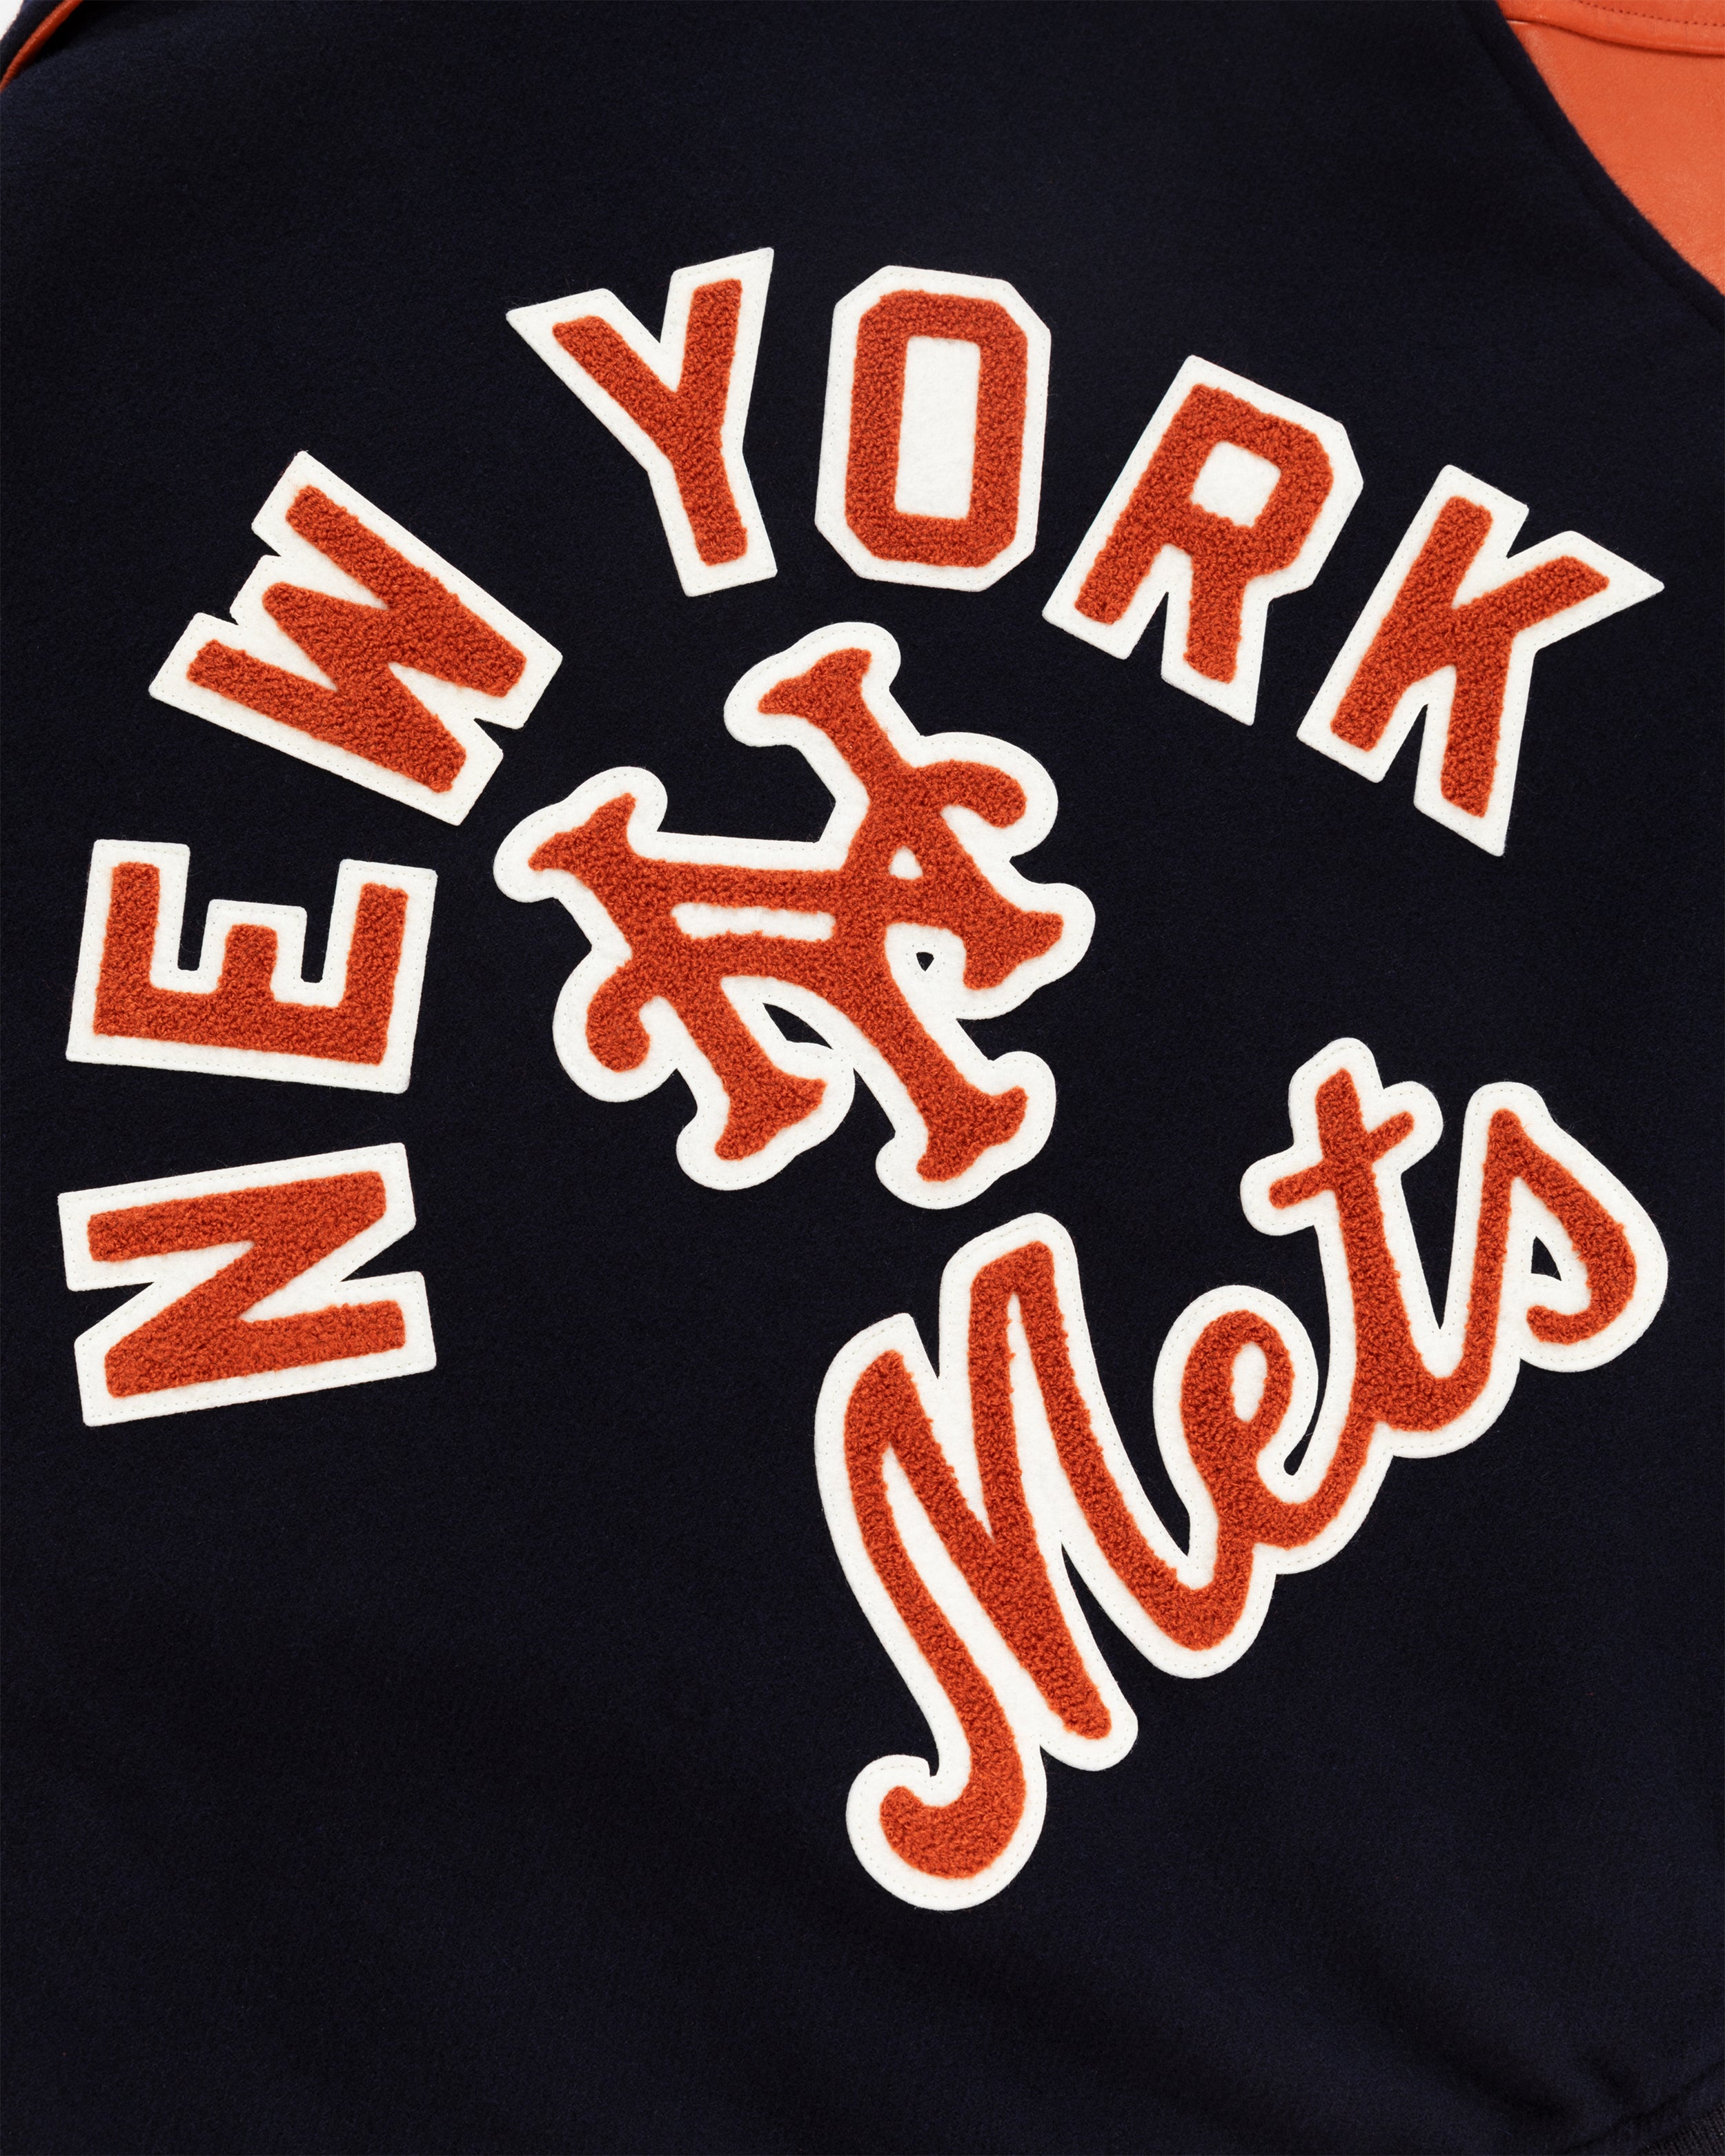 ALD / New York Mets Varsity Jacket